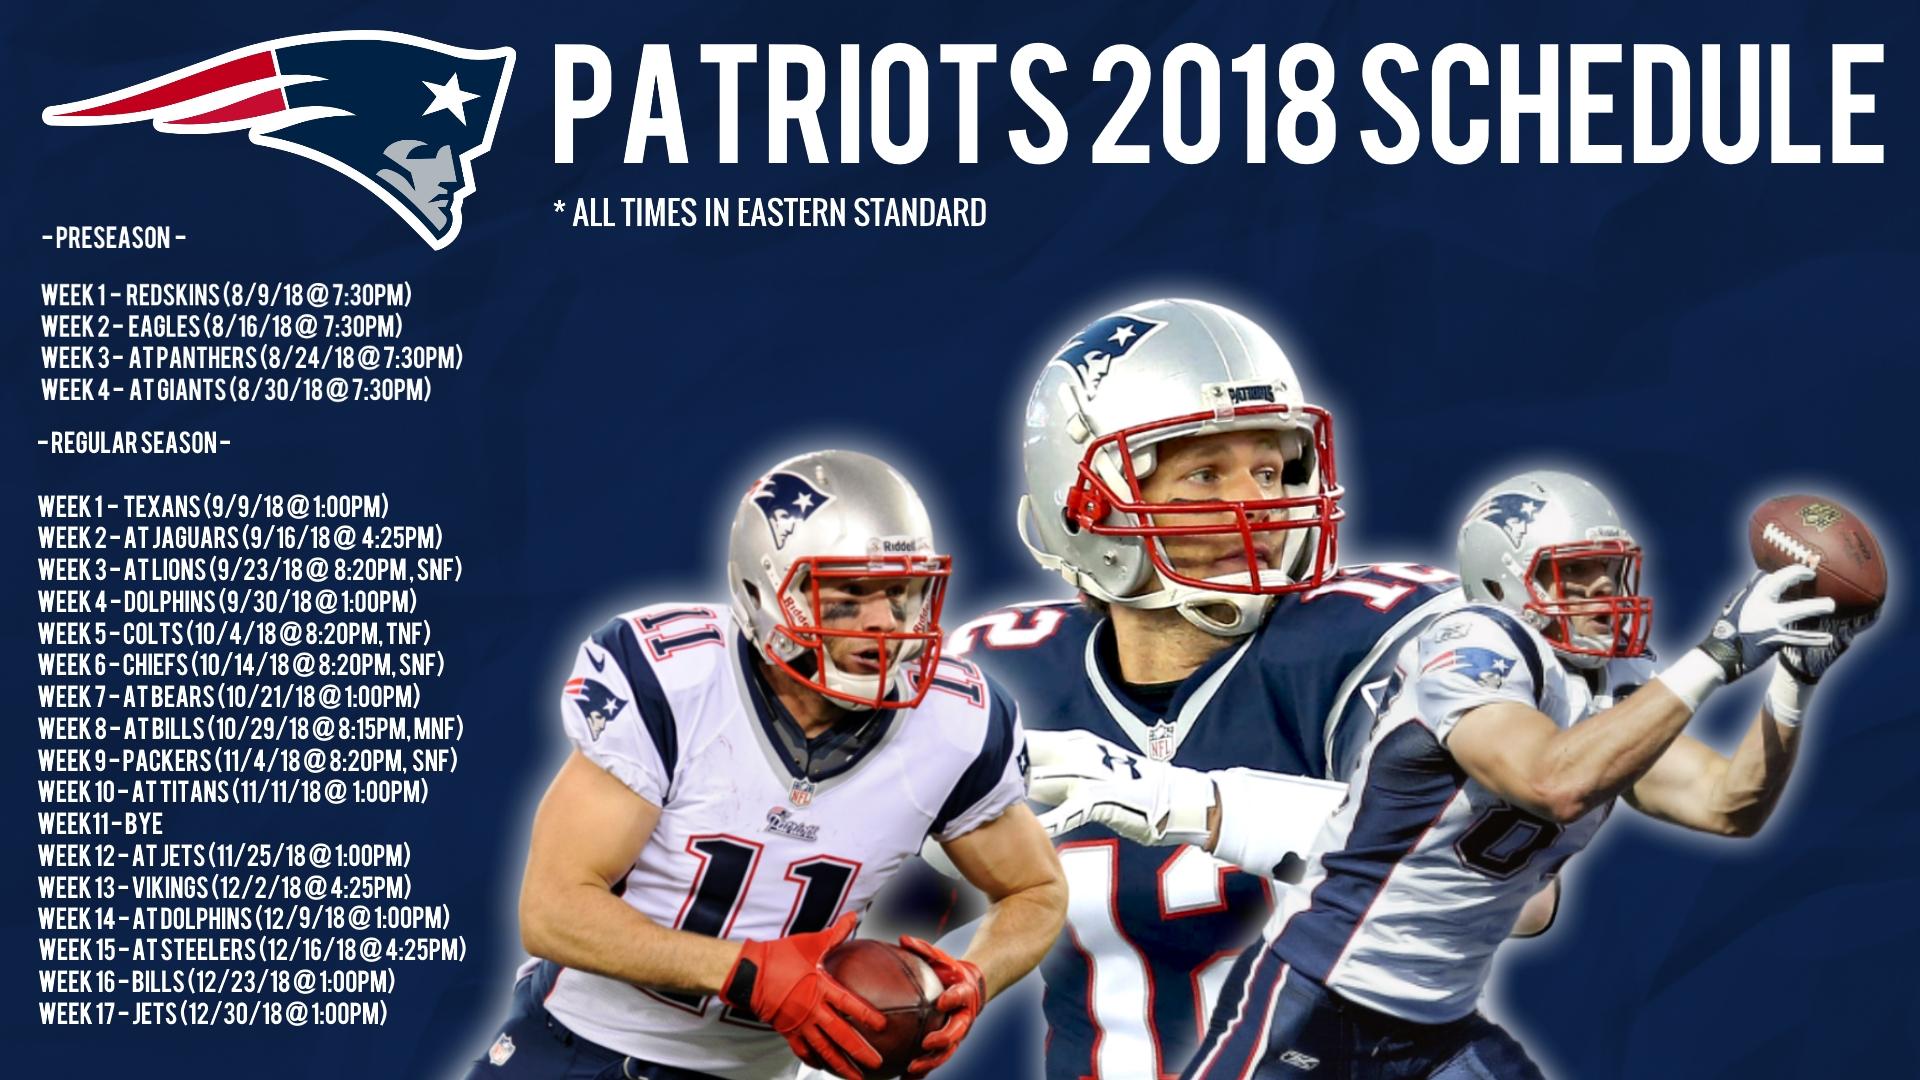 2018 Hd Patriots Schedule Wallpaper - Patriots Preseason Schedule 2018 , HD Wallpaper & Backgrounds